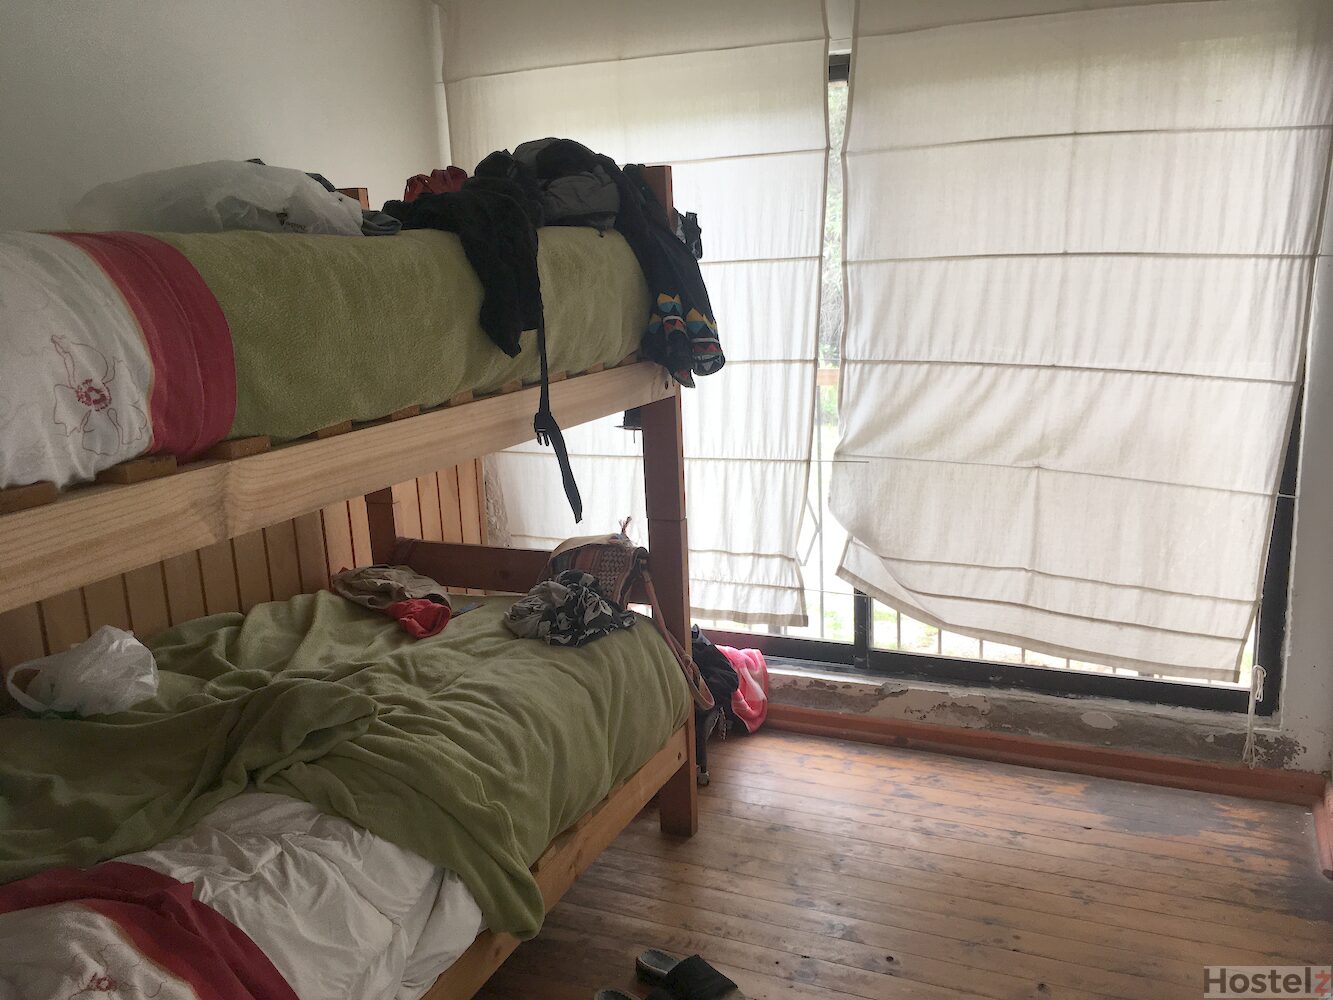 8-bed dorm